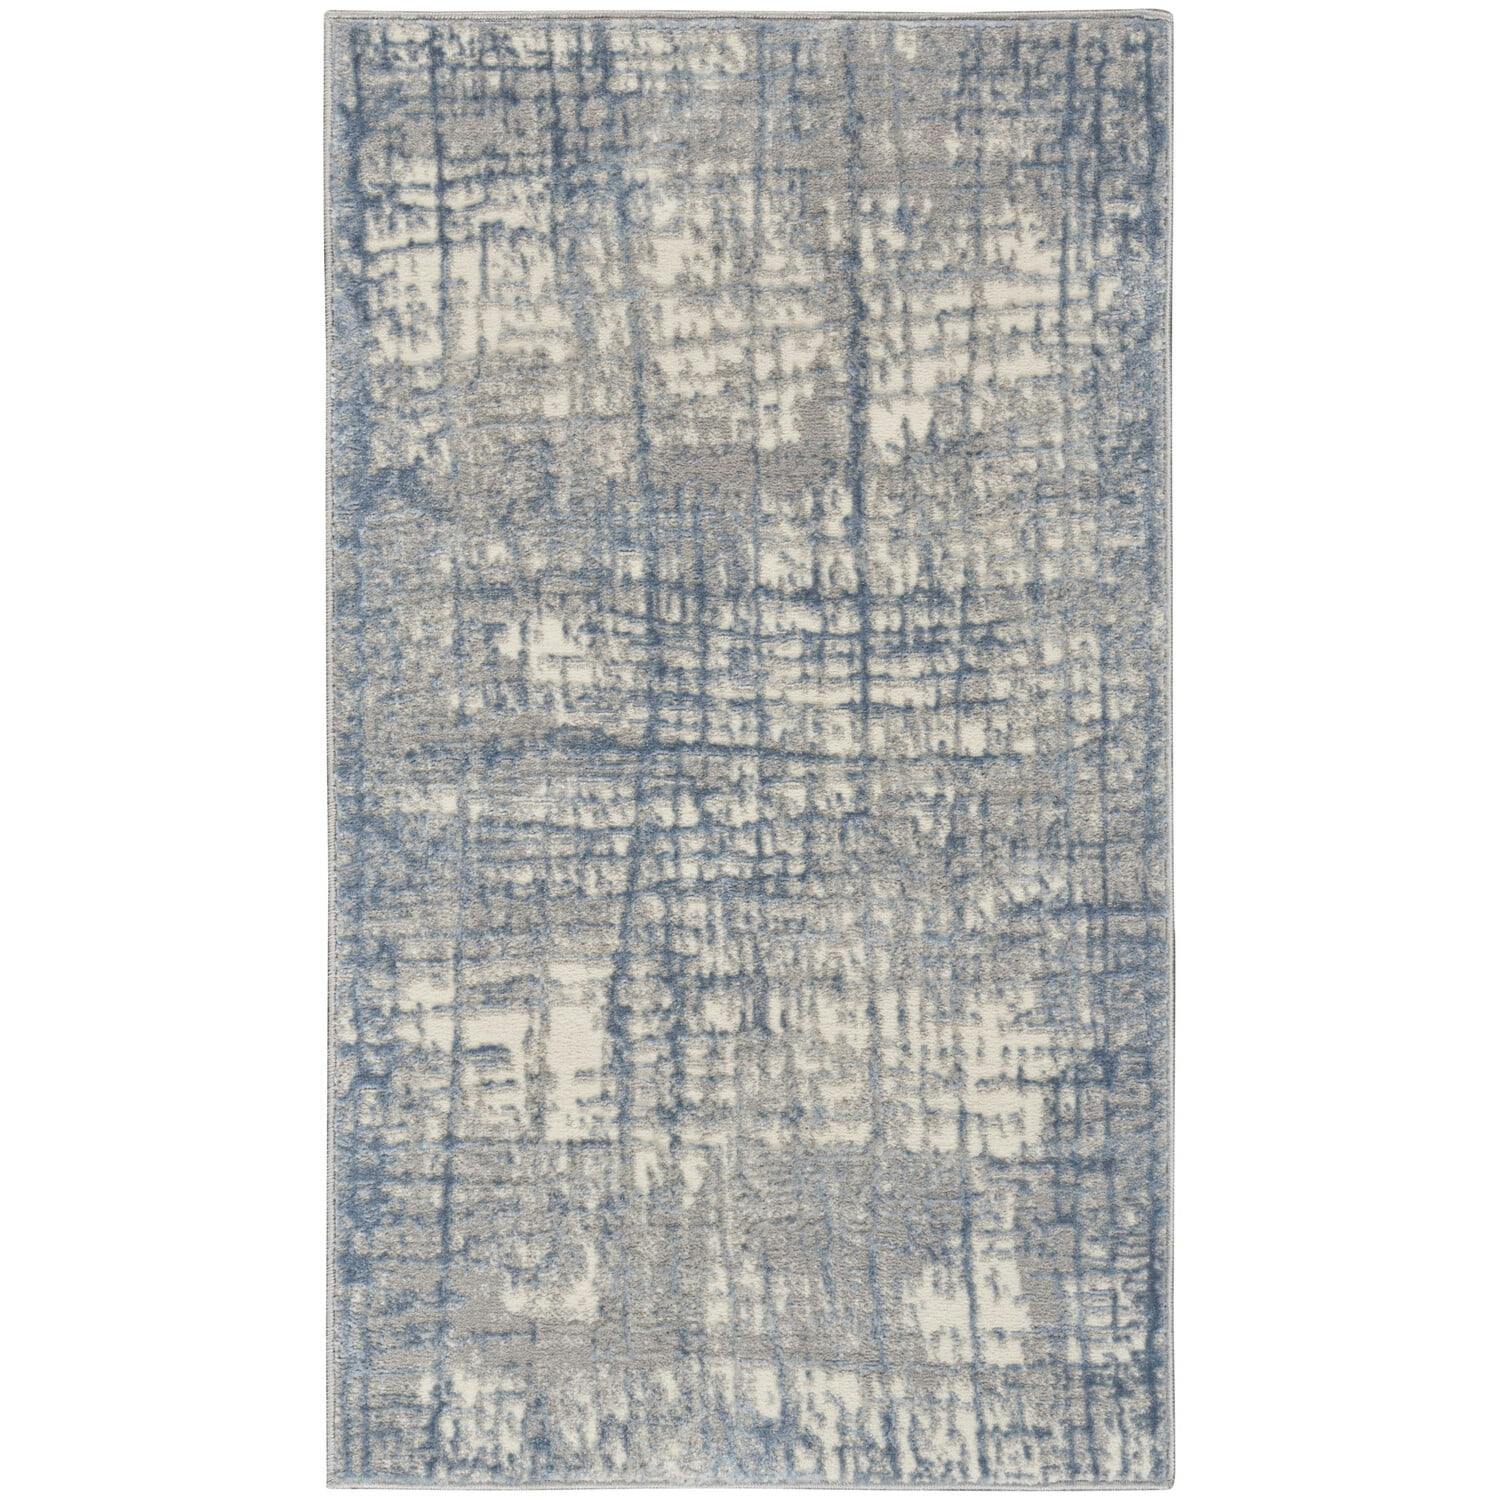 Ivory Blue Abstract Handmade Viscose Area Rug, 3'2" x 5'